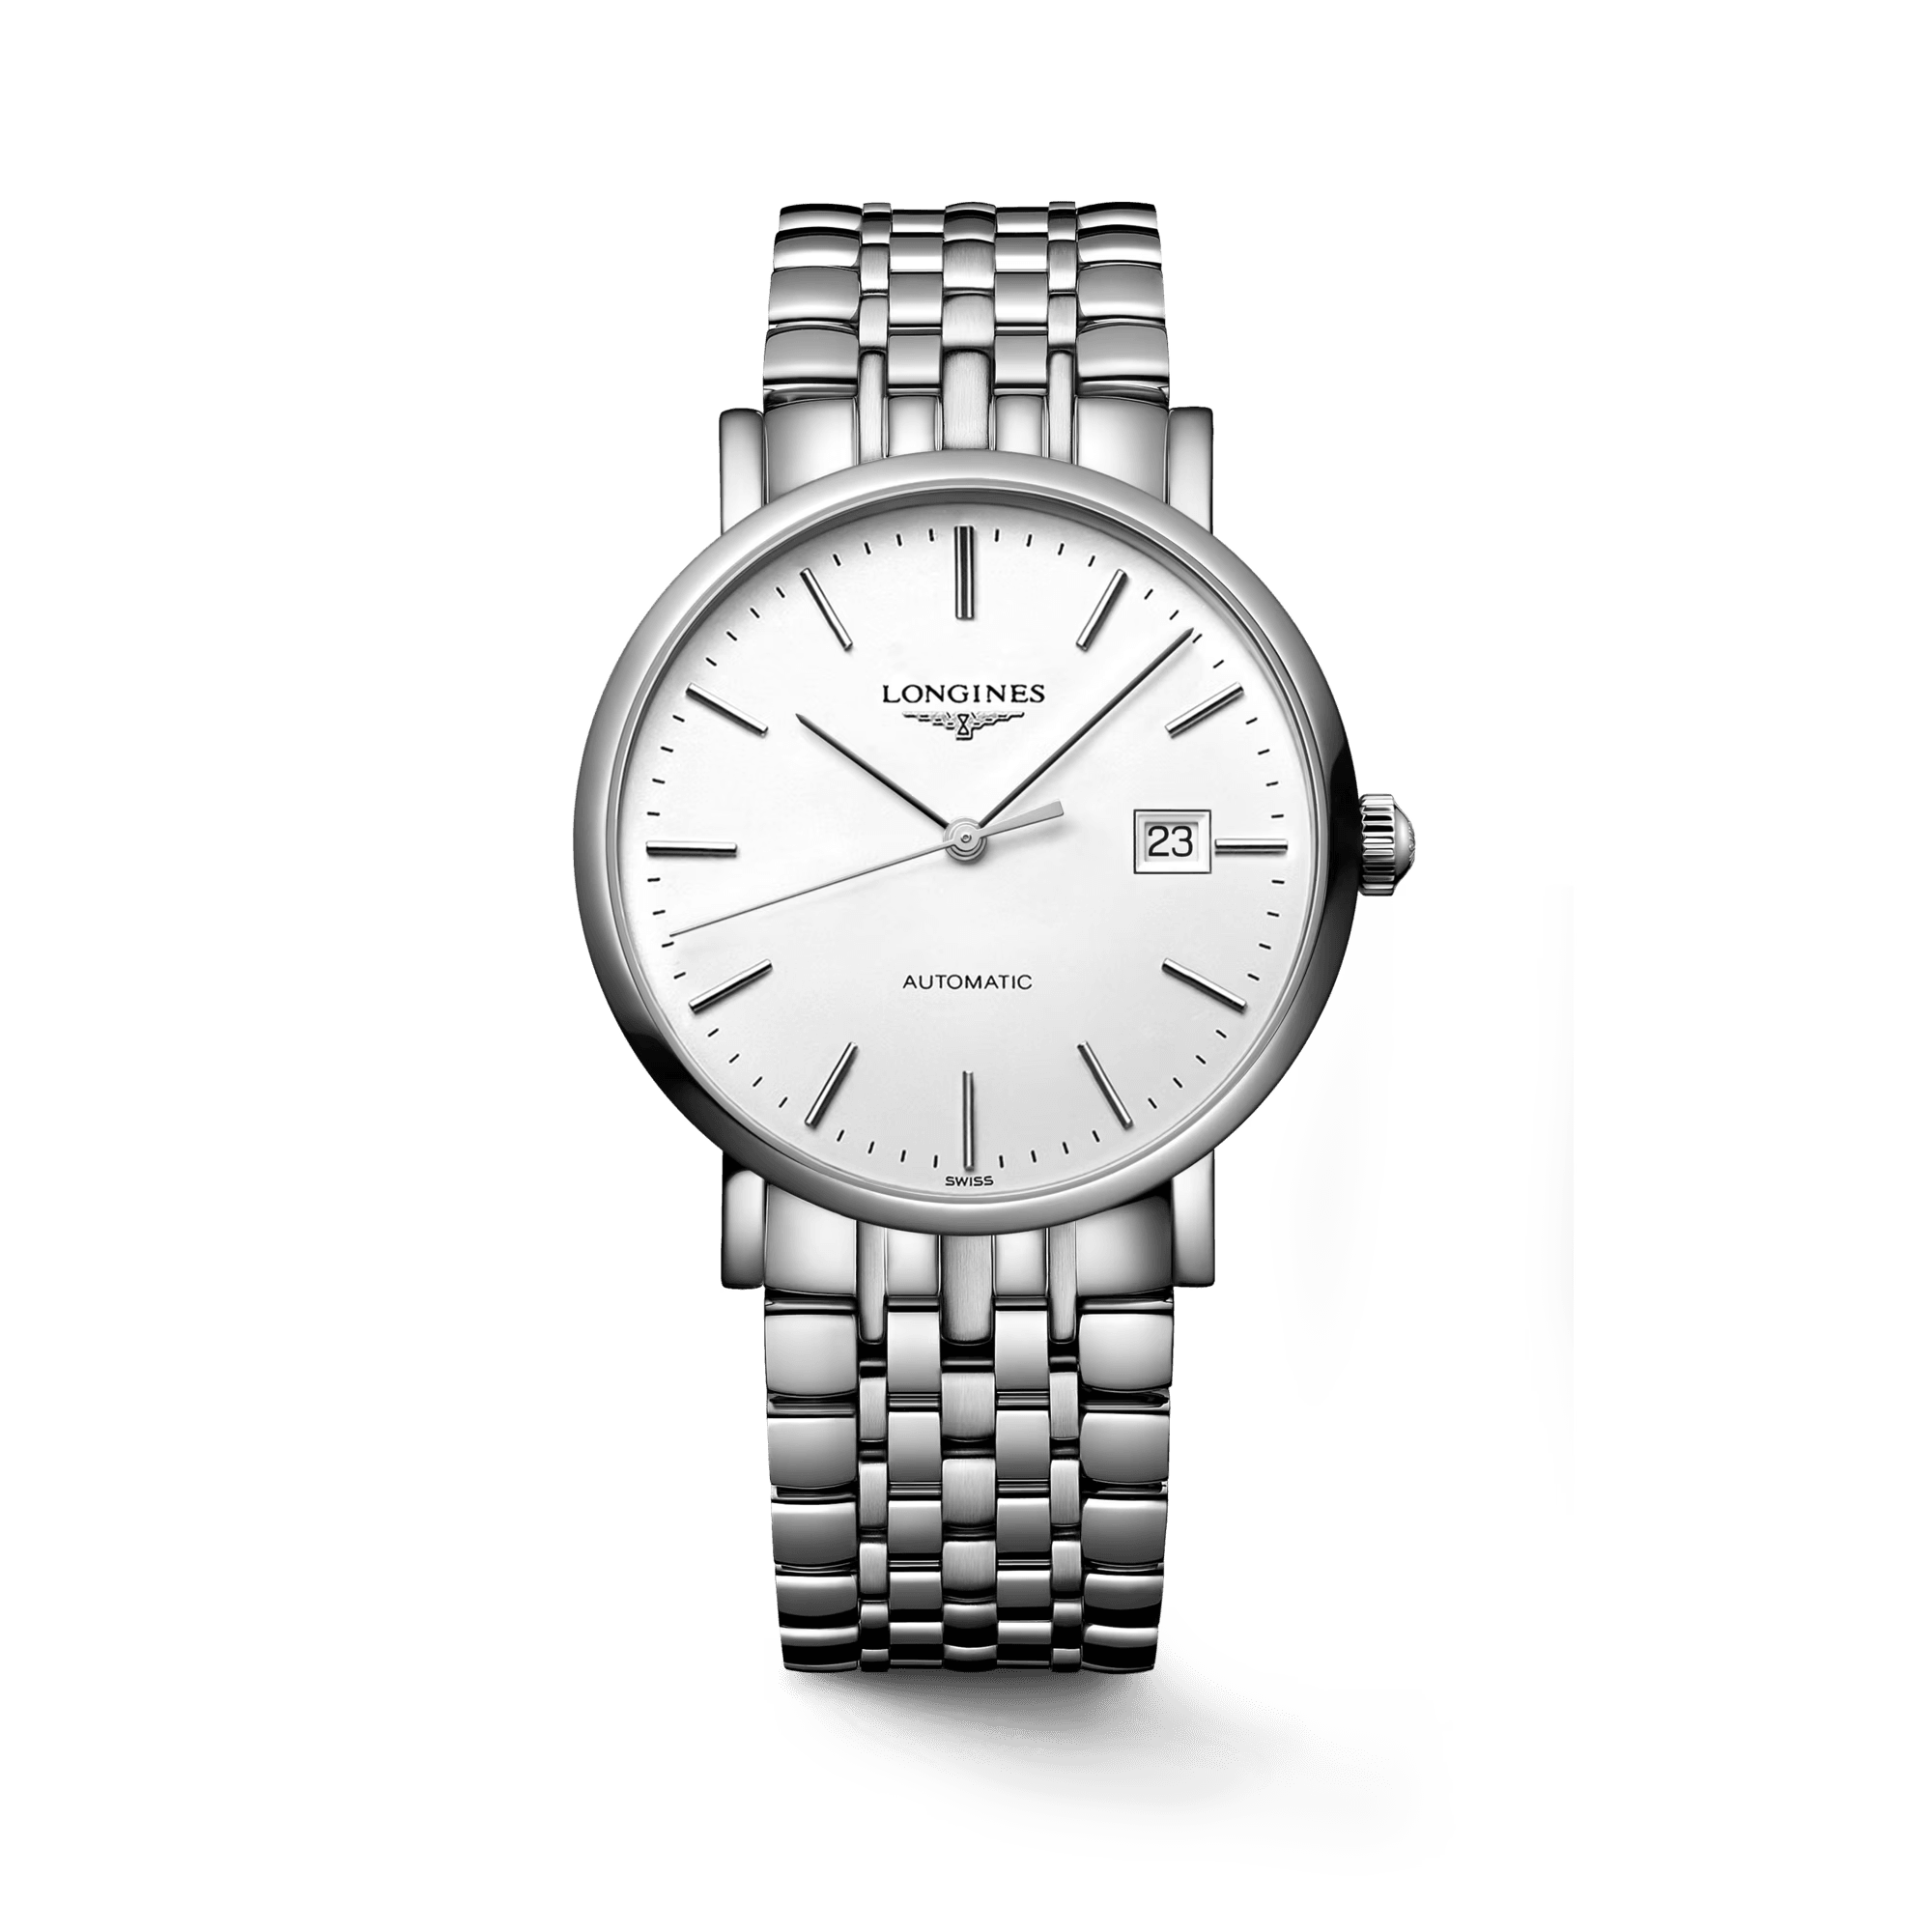 Longines The Longines Elegant Collection Automatic Men's Watch L49104126